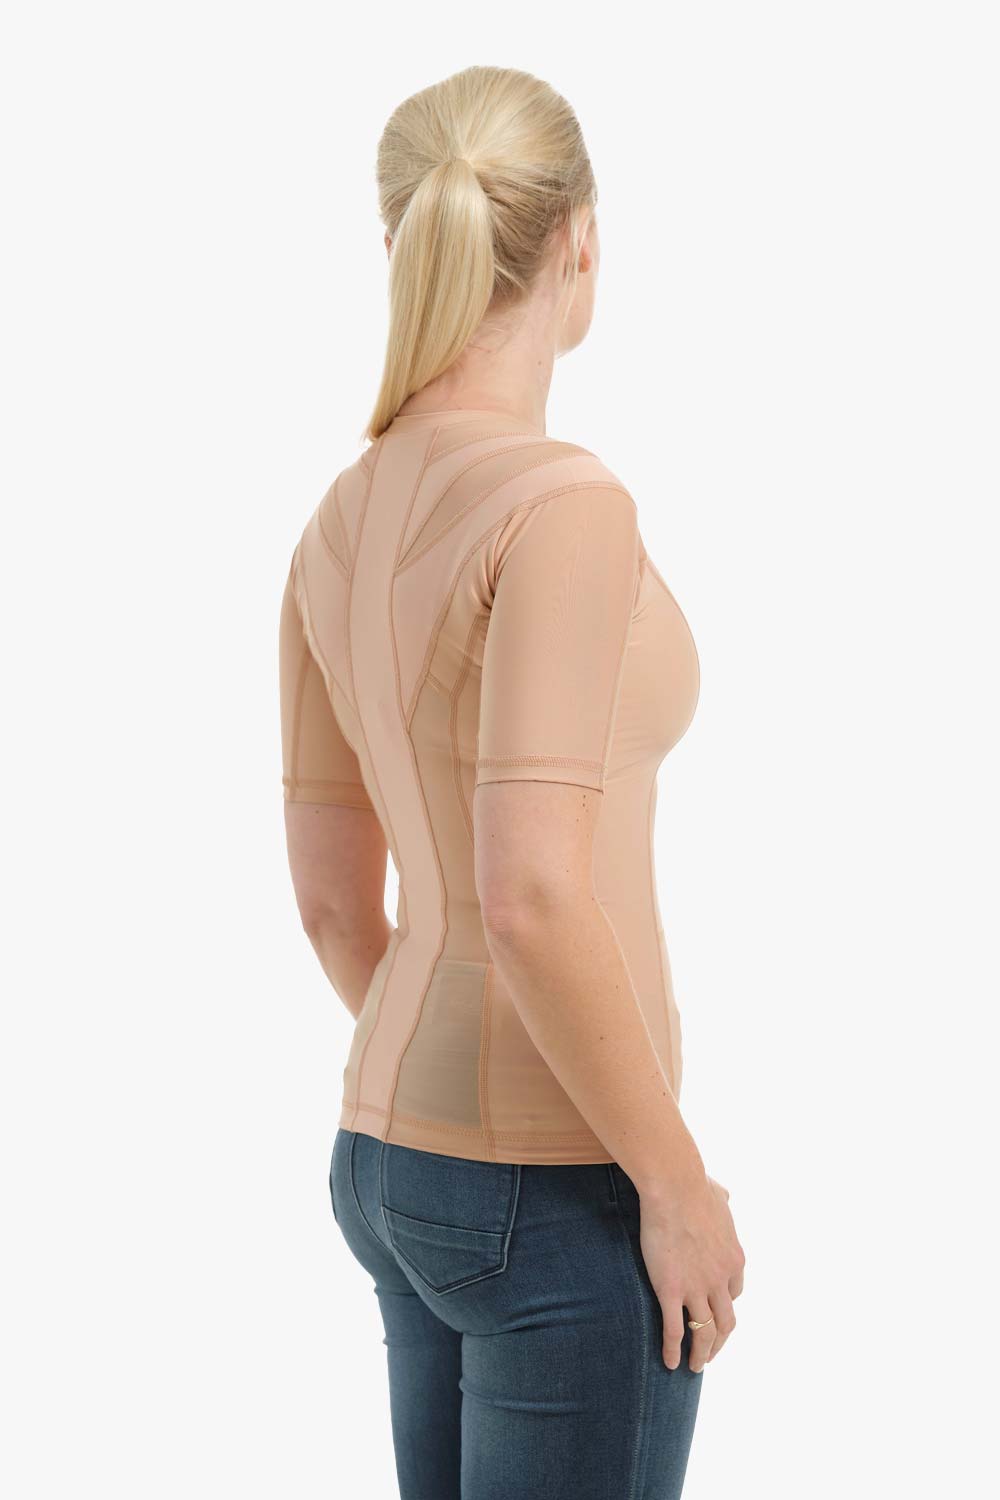 DEMO - Women's Posture Shirt™ Zipper - Nude